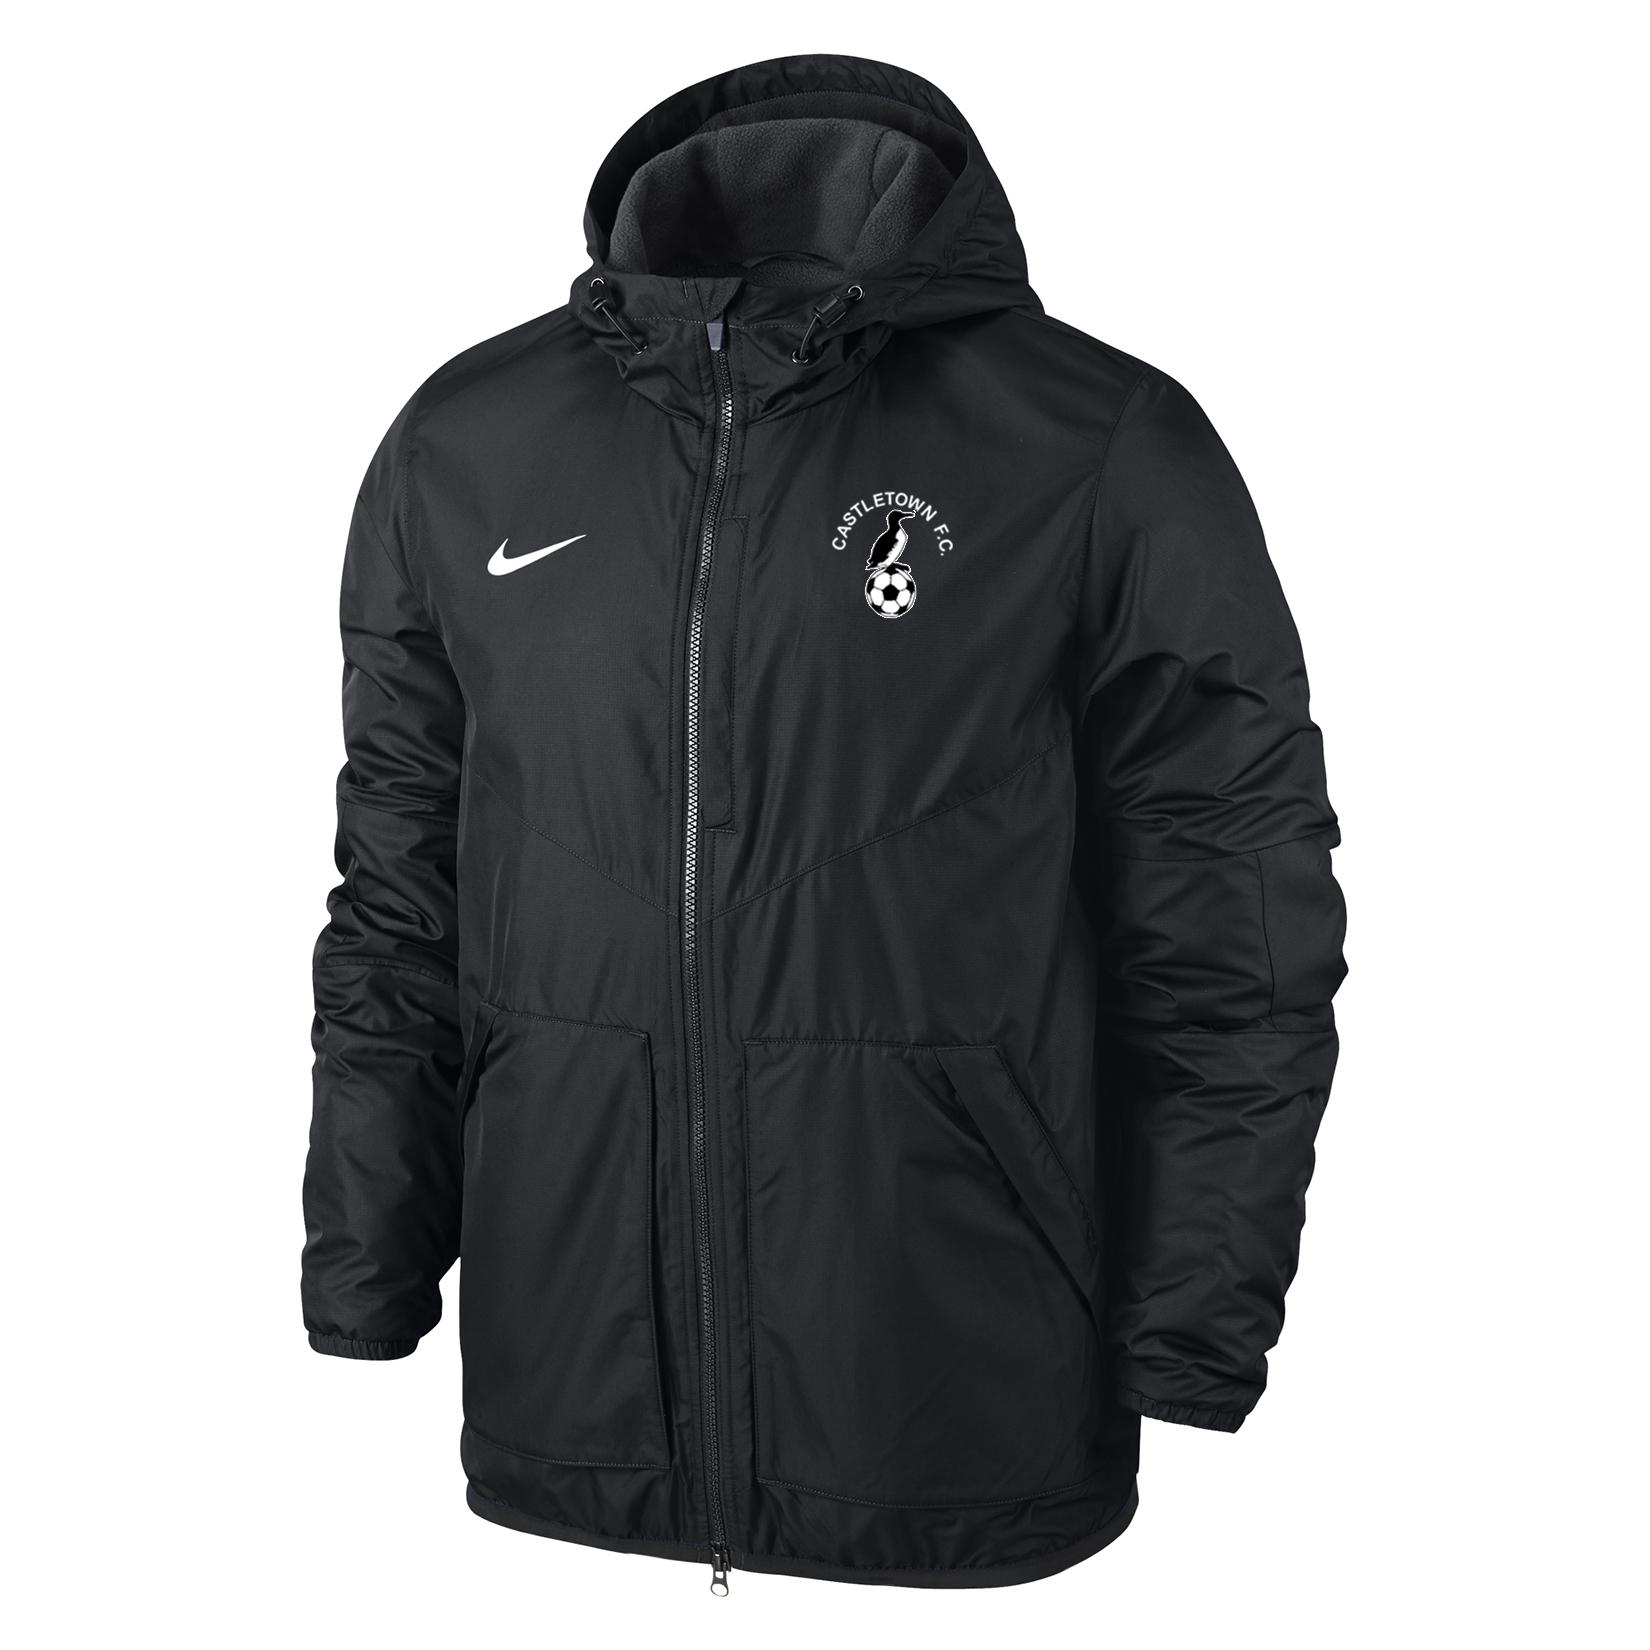 Nike Team Fall Fleece Lined Jacket